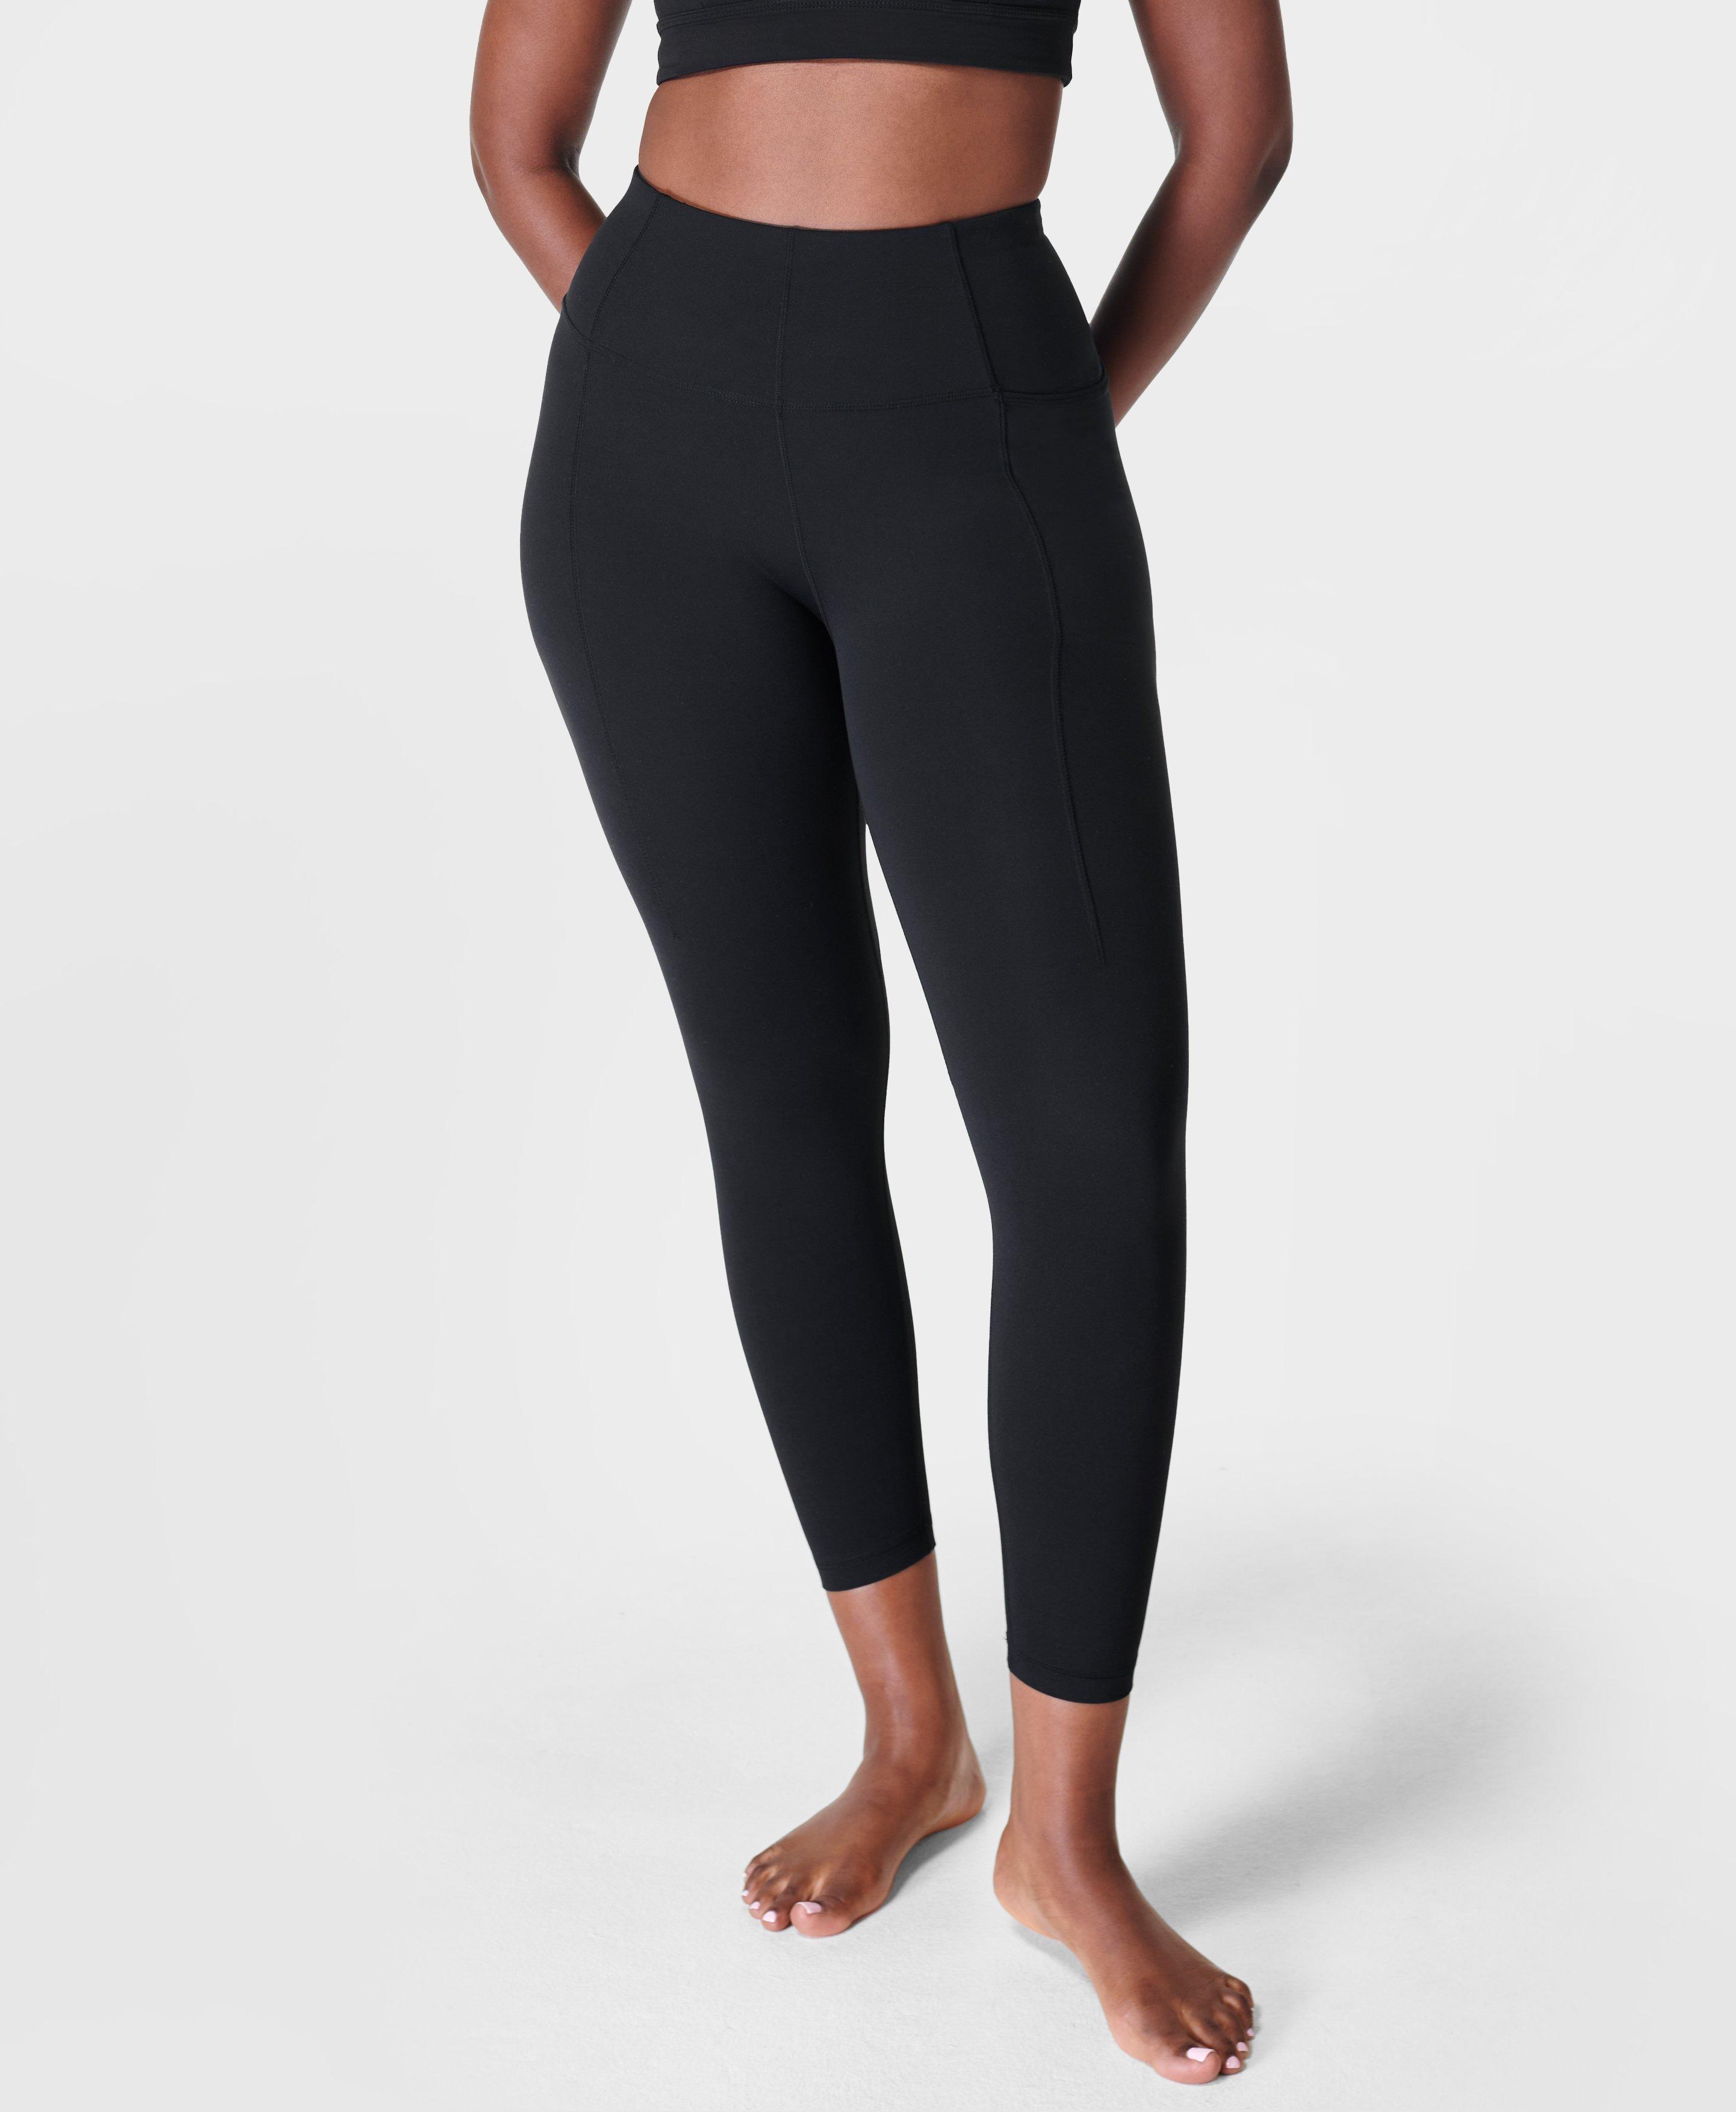 Popfit Leggings Black Size M - $8 (73% Off Retail) - From katie